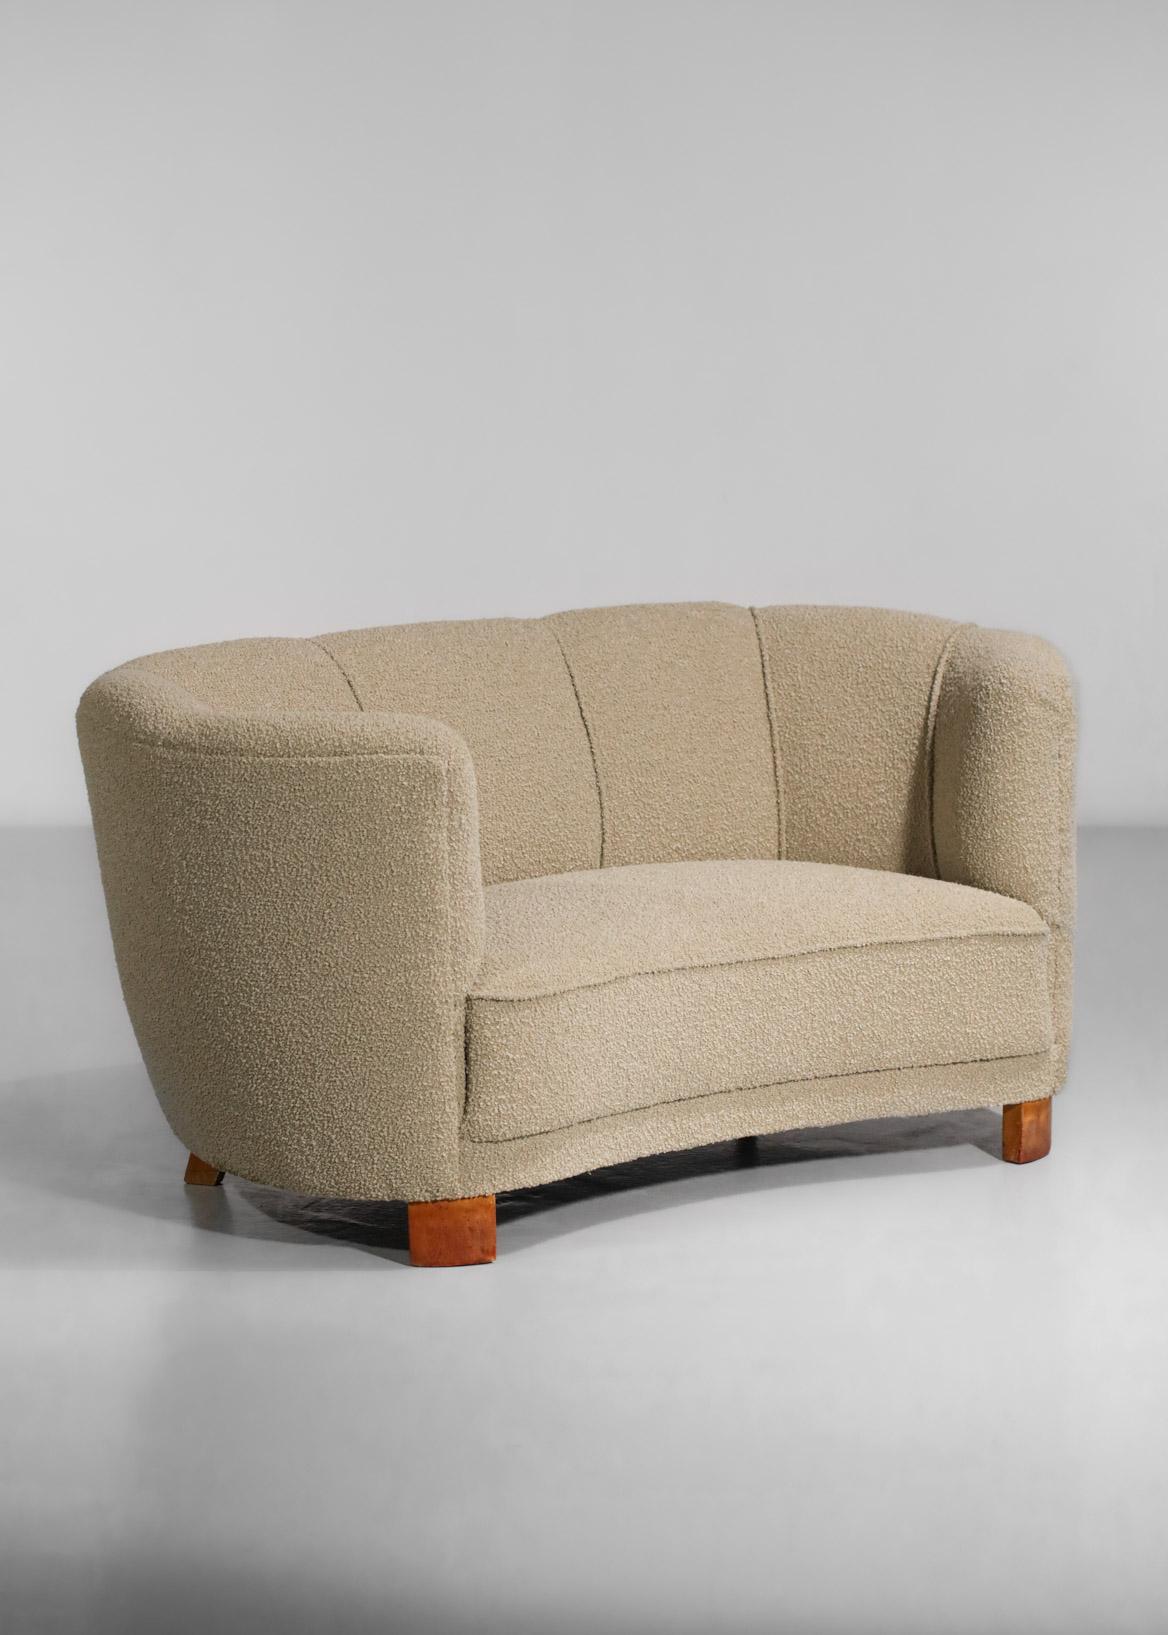 Rare Danish Sofa from the 40's Curved Beige Fabric Scandinavian Armchair 14